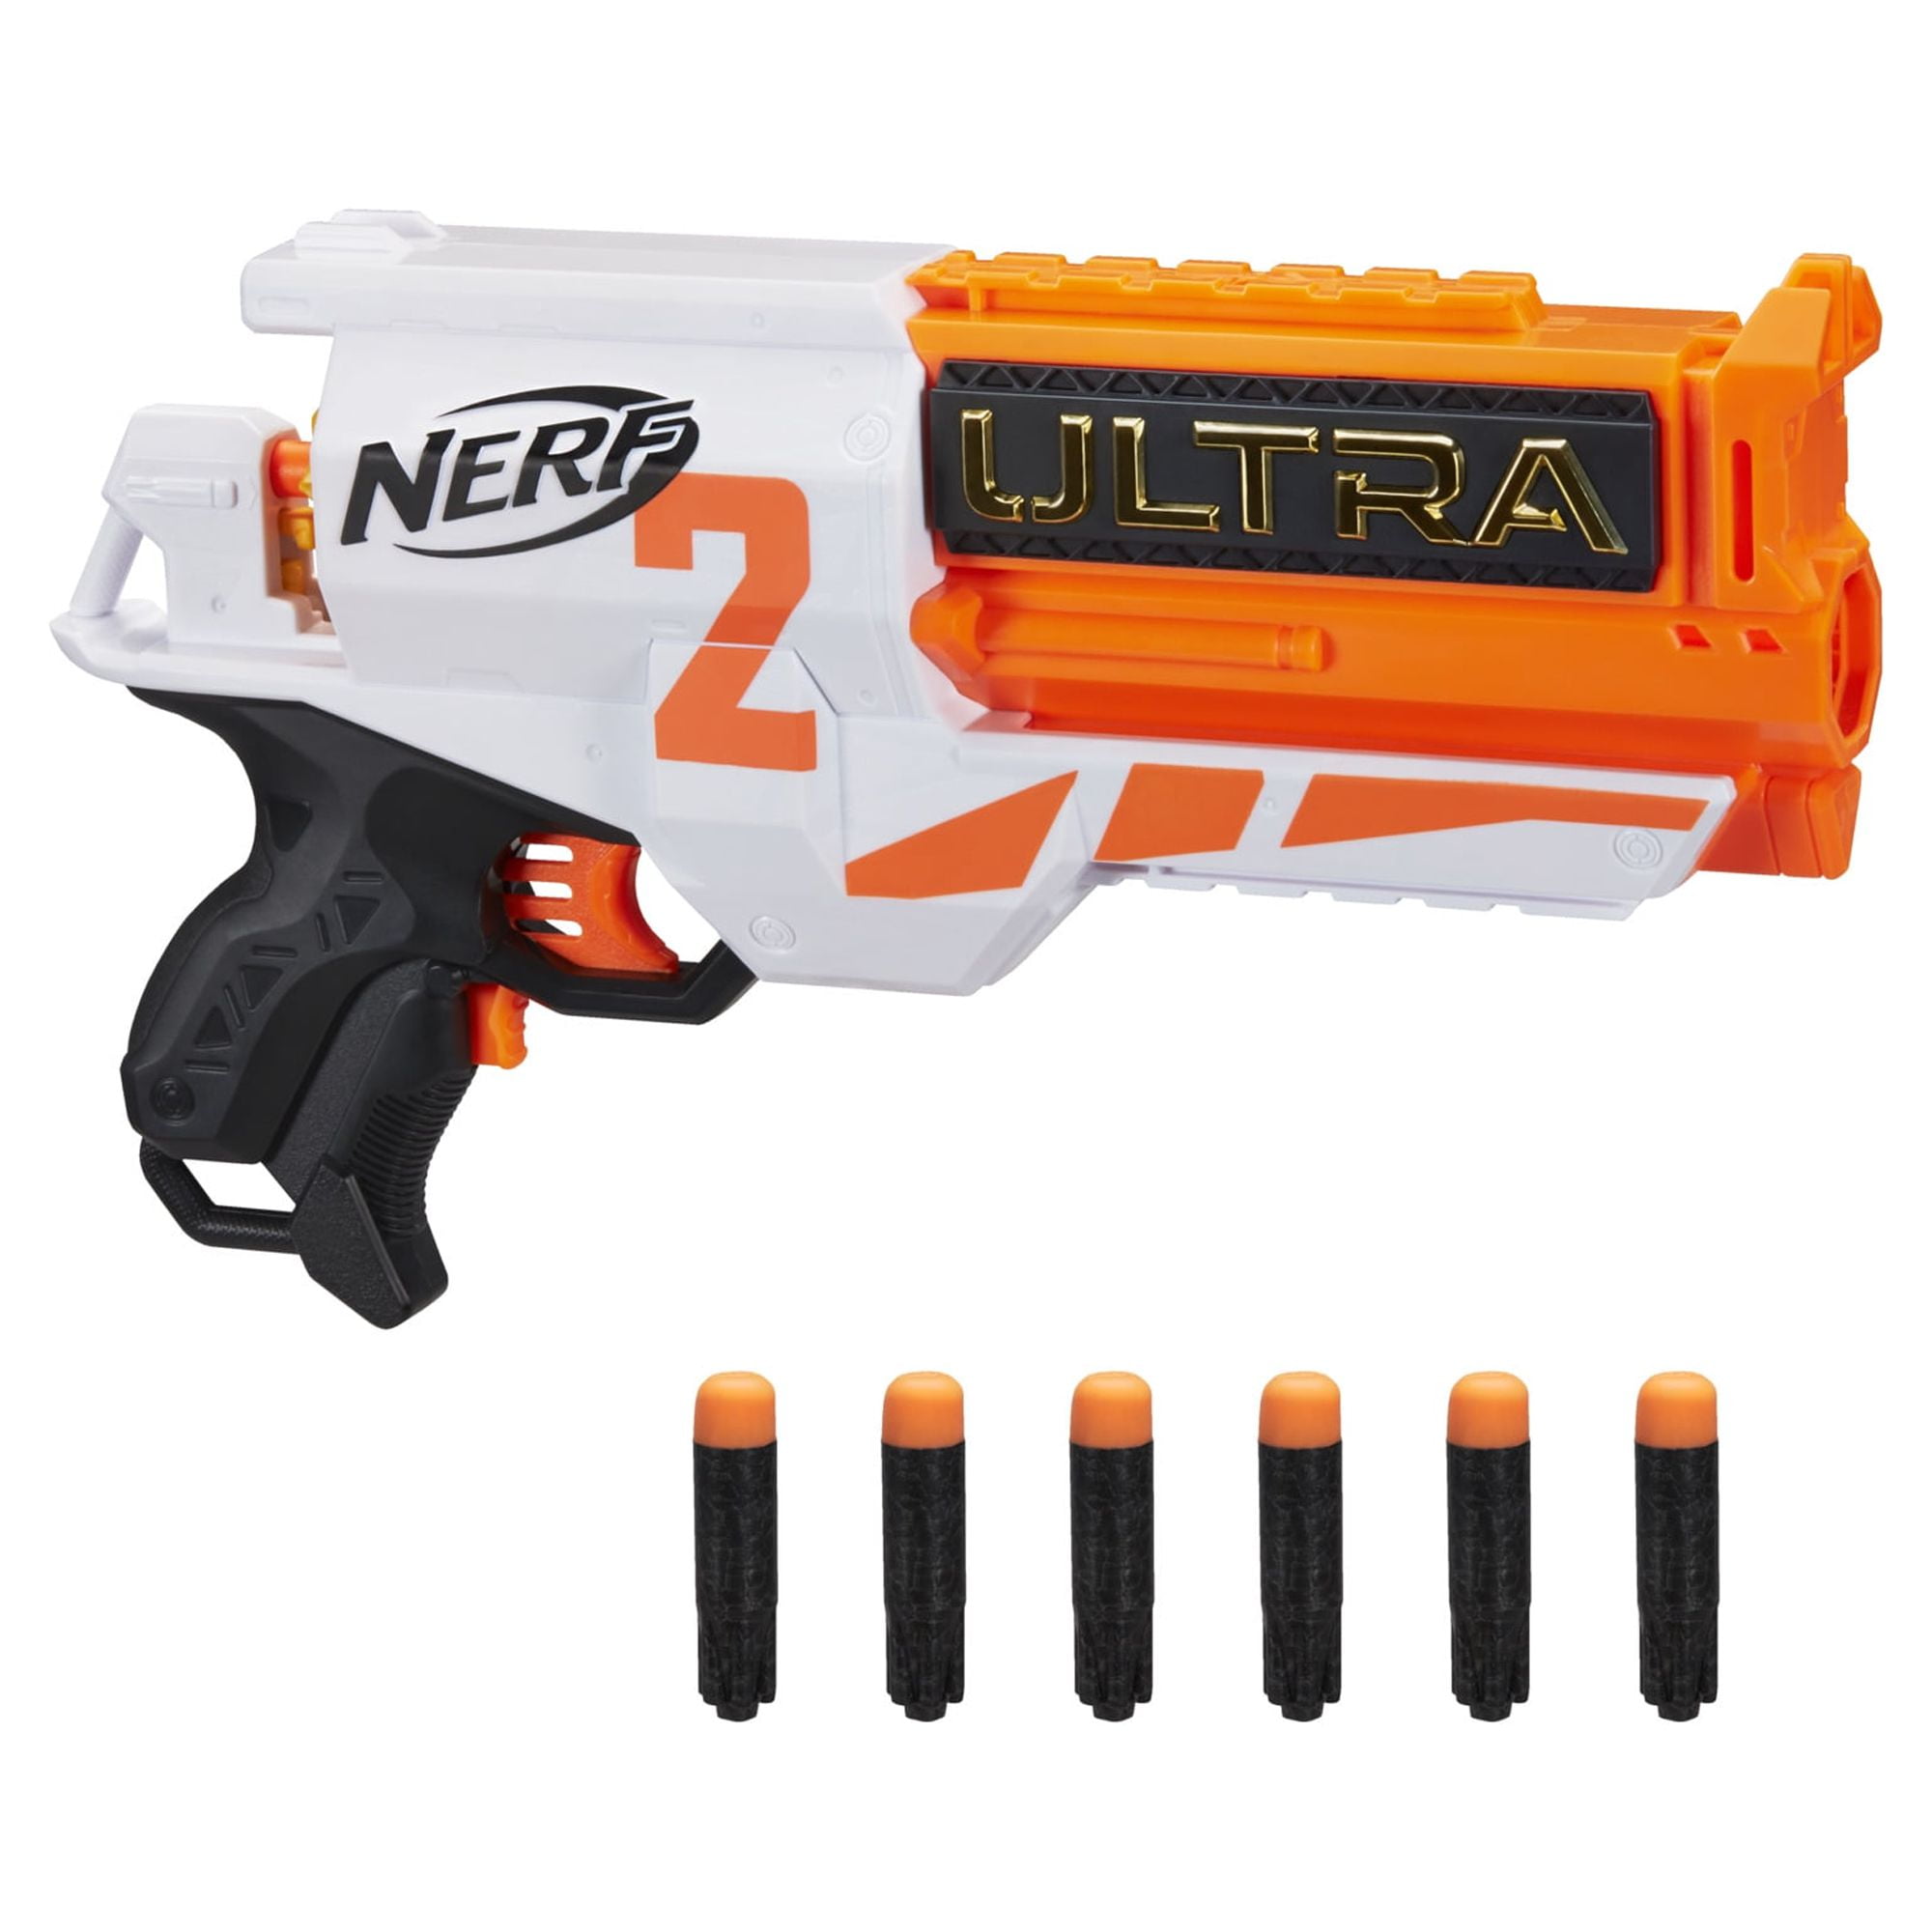 Nerf Ultra Speed Fully Motorized Blaster, 24 Nerf AccuStrike Ultra